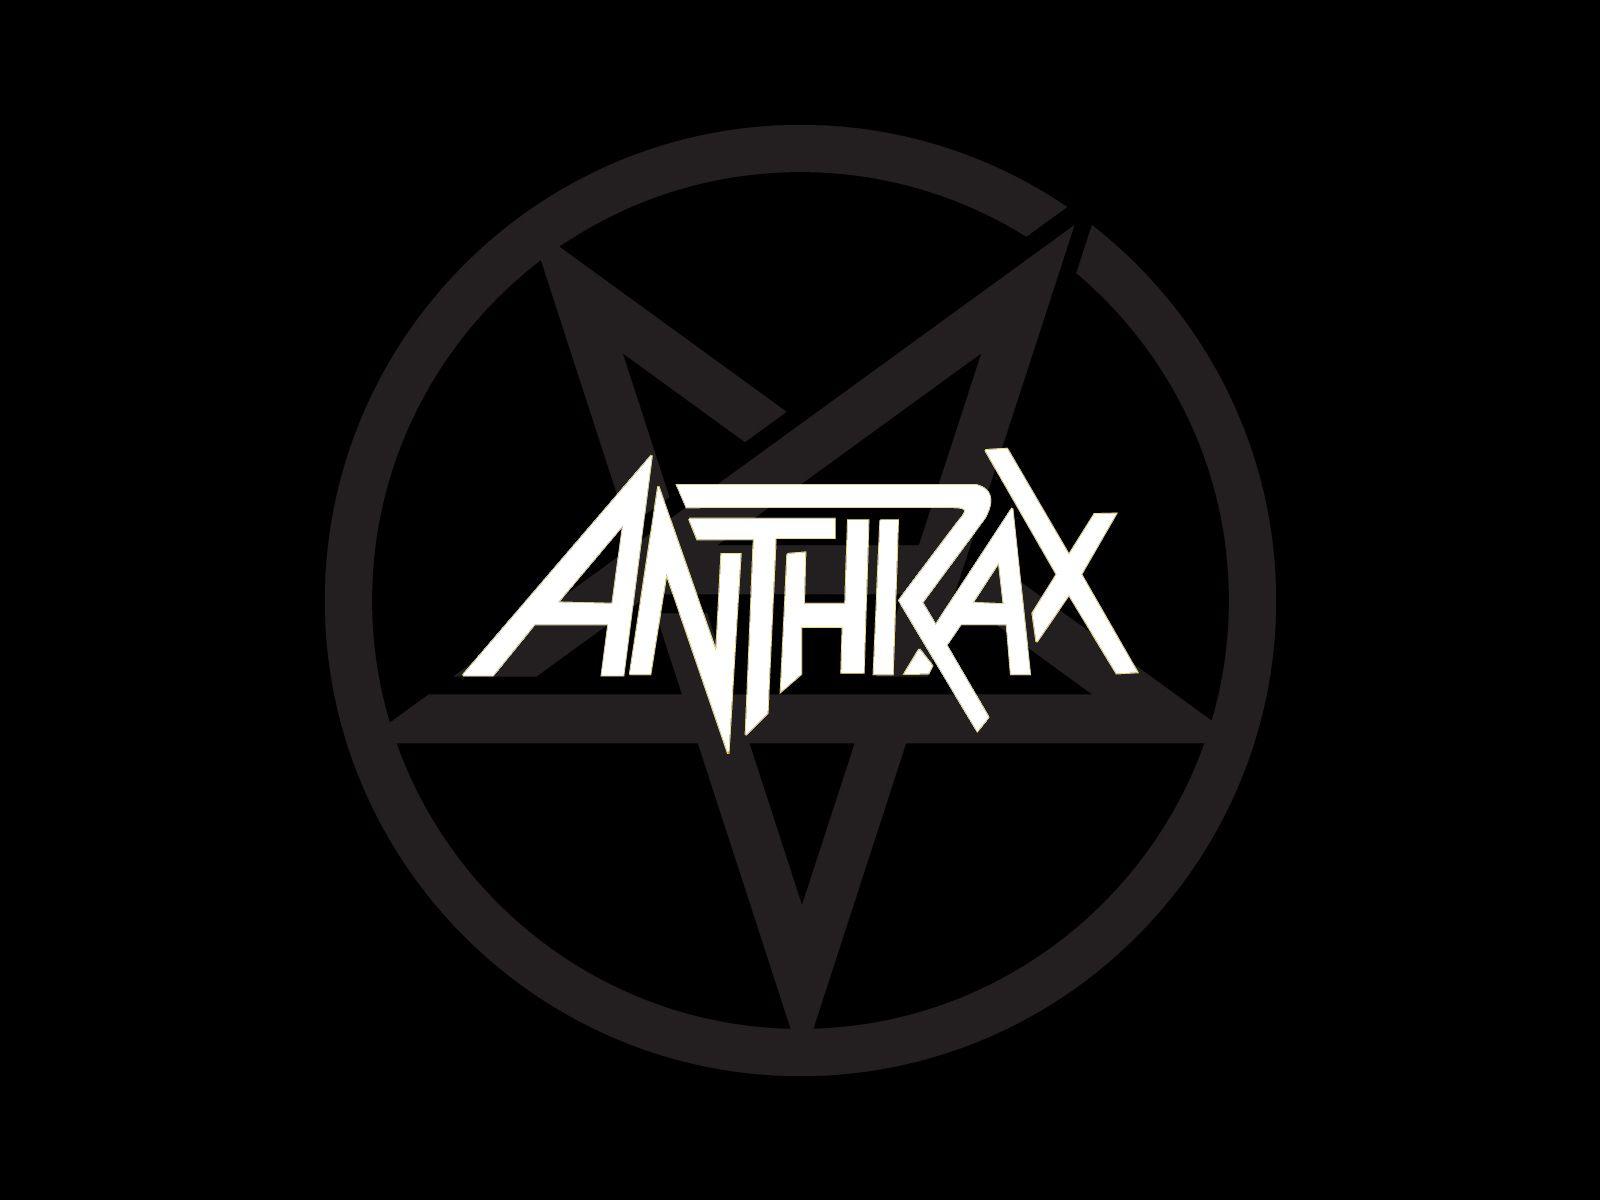 Anthrax Logo - Anthrax logo and Anthrax wallpaper | Band logos - Rock band logos ...